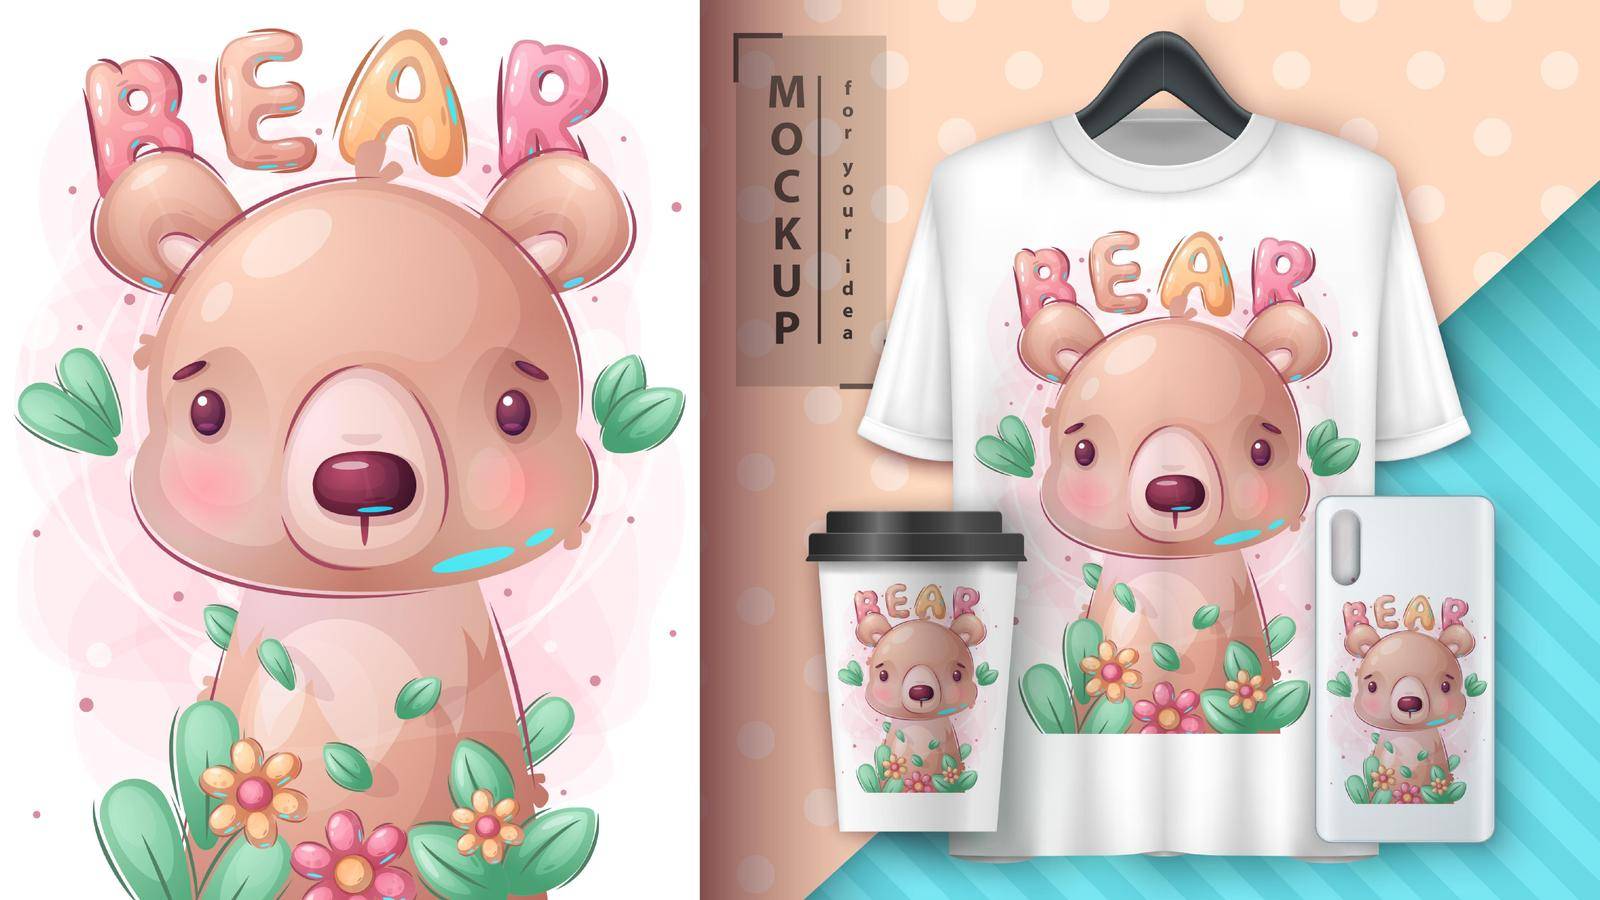 Bear in flower poster and merchandising. Vector eps 10